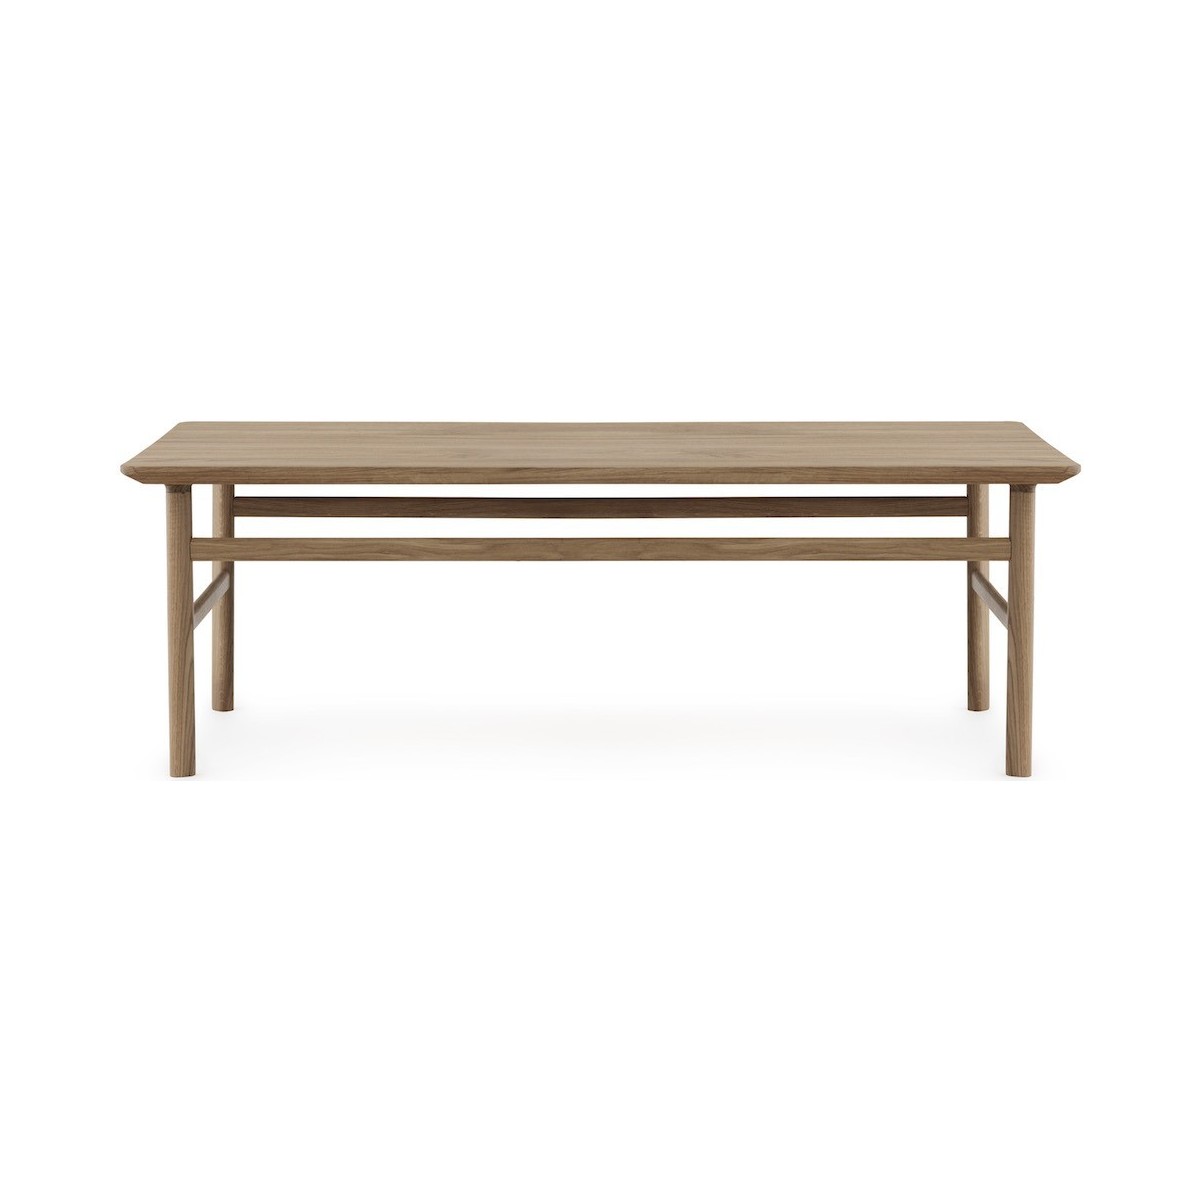 oak - 120 x 70 x H40 cm - Grow coffee table